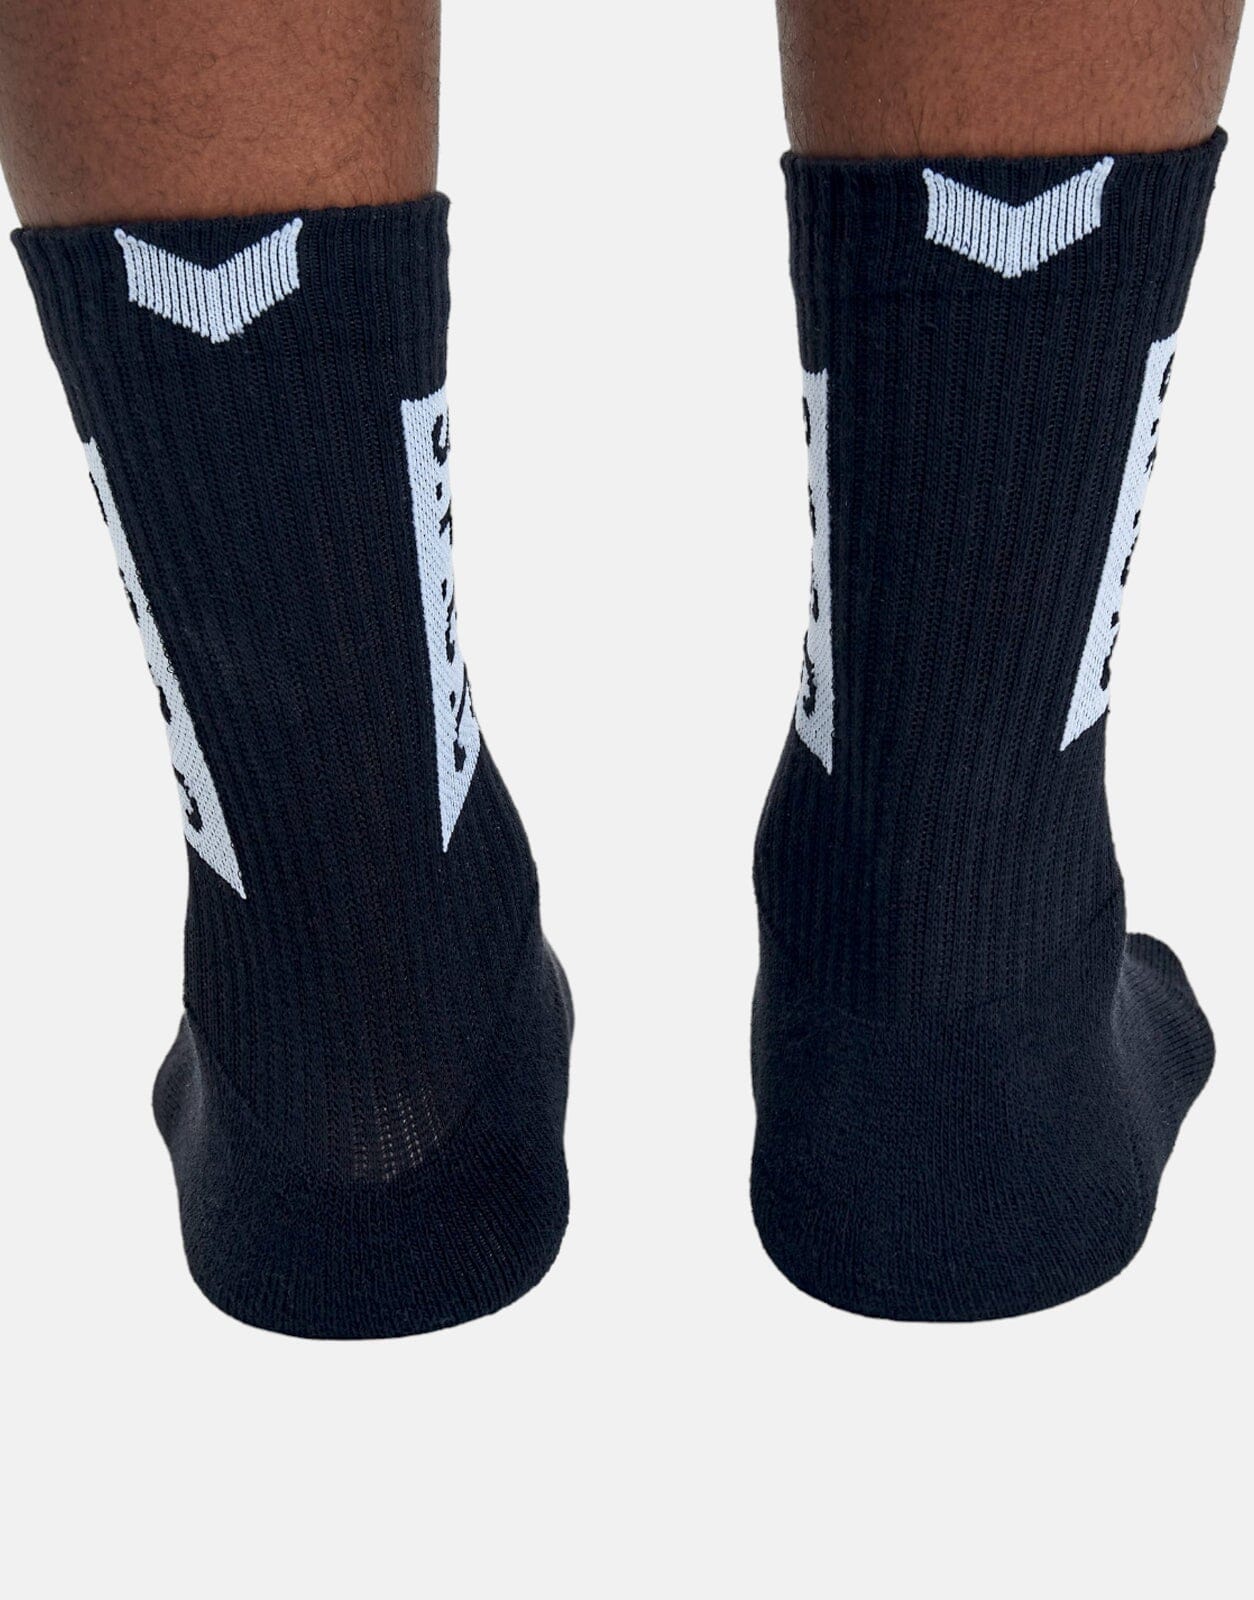 SPCC Johnson 3PK Blk/Wht Socks - Subwear